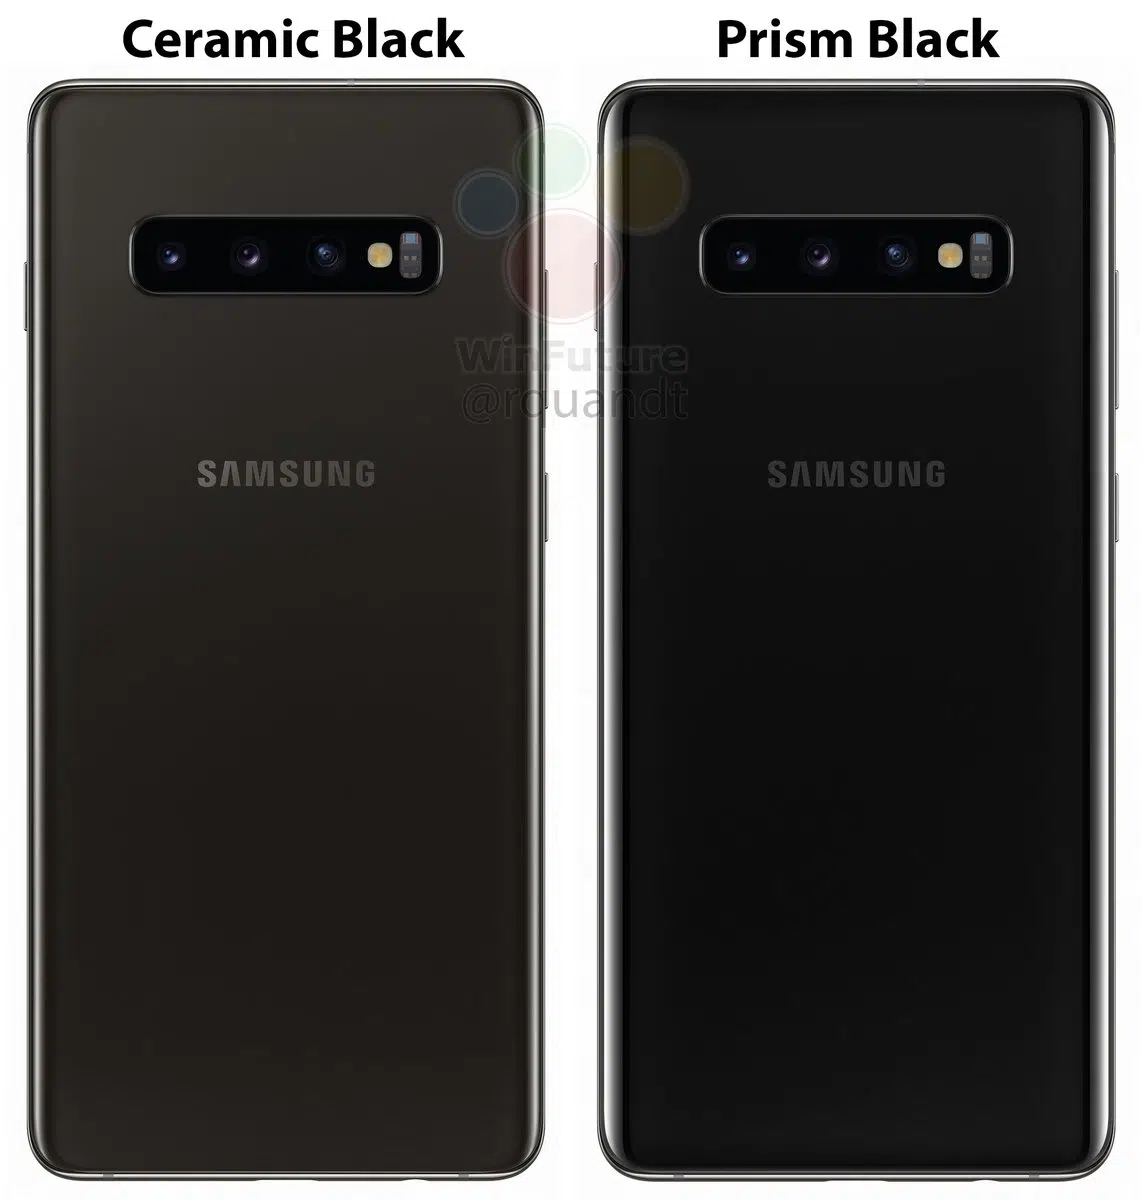 Ceramic Black Galaxy S10+